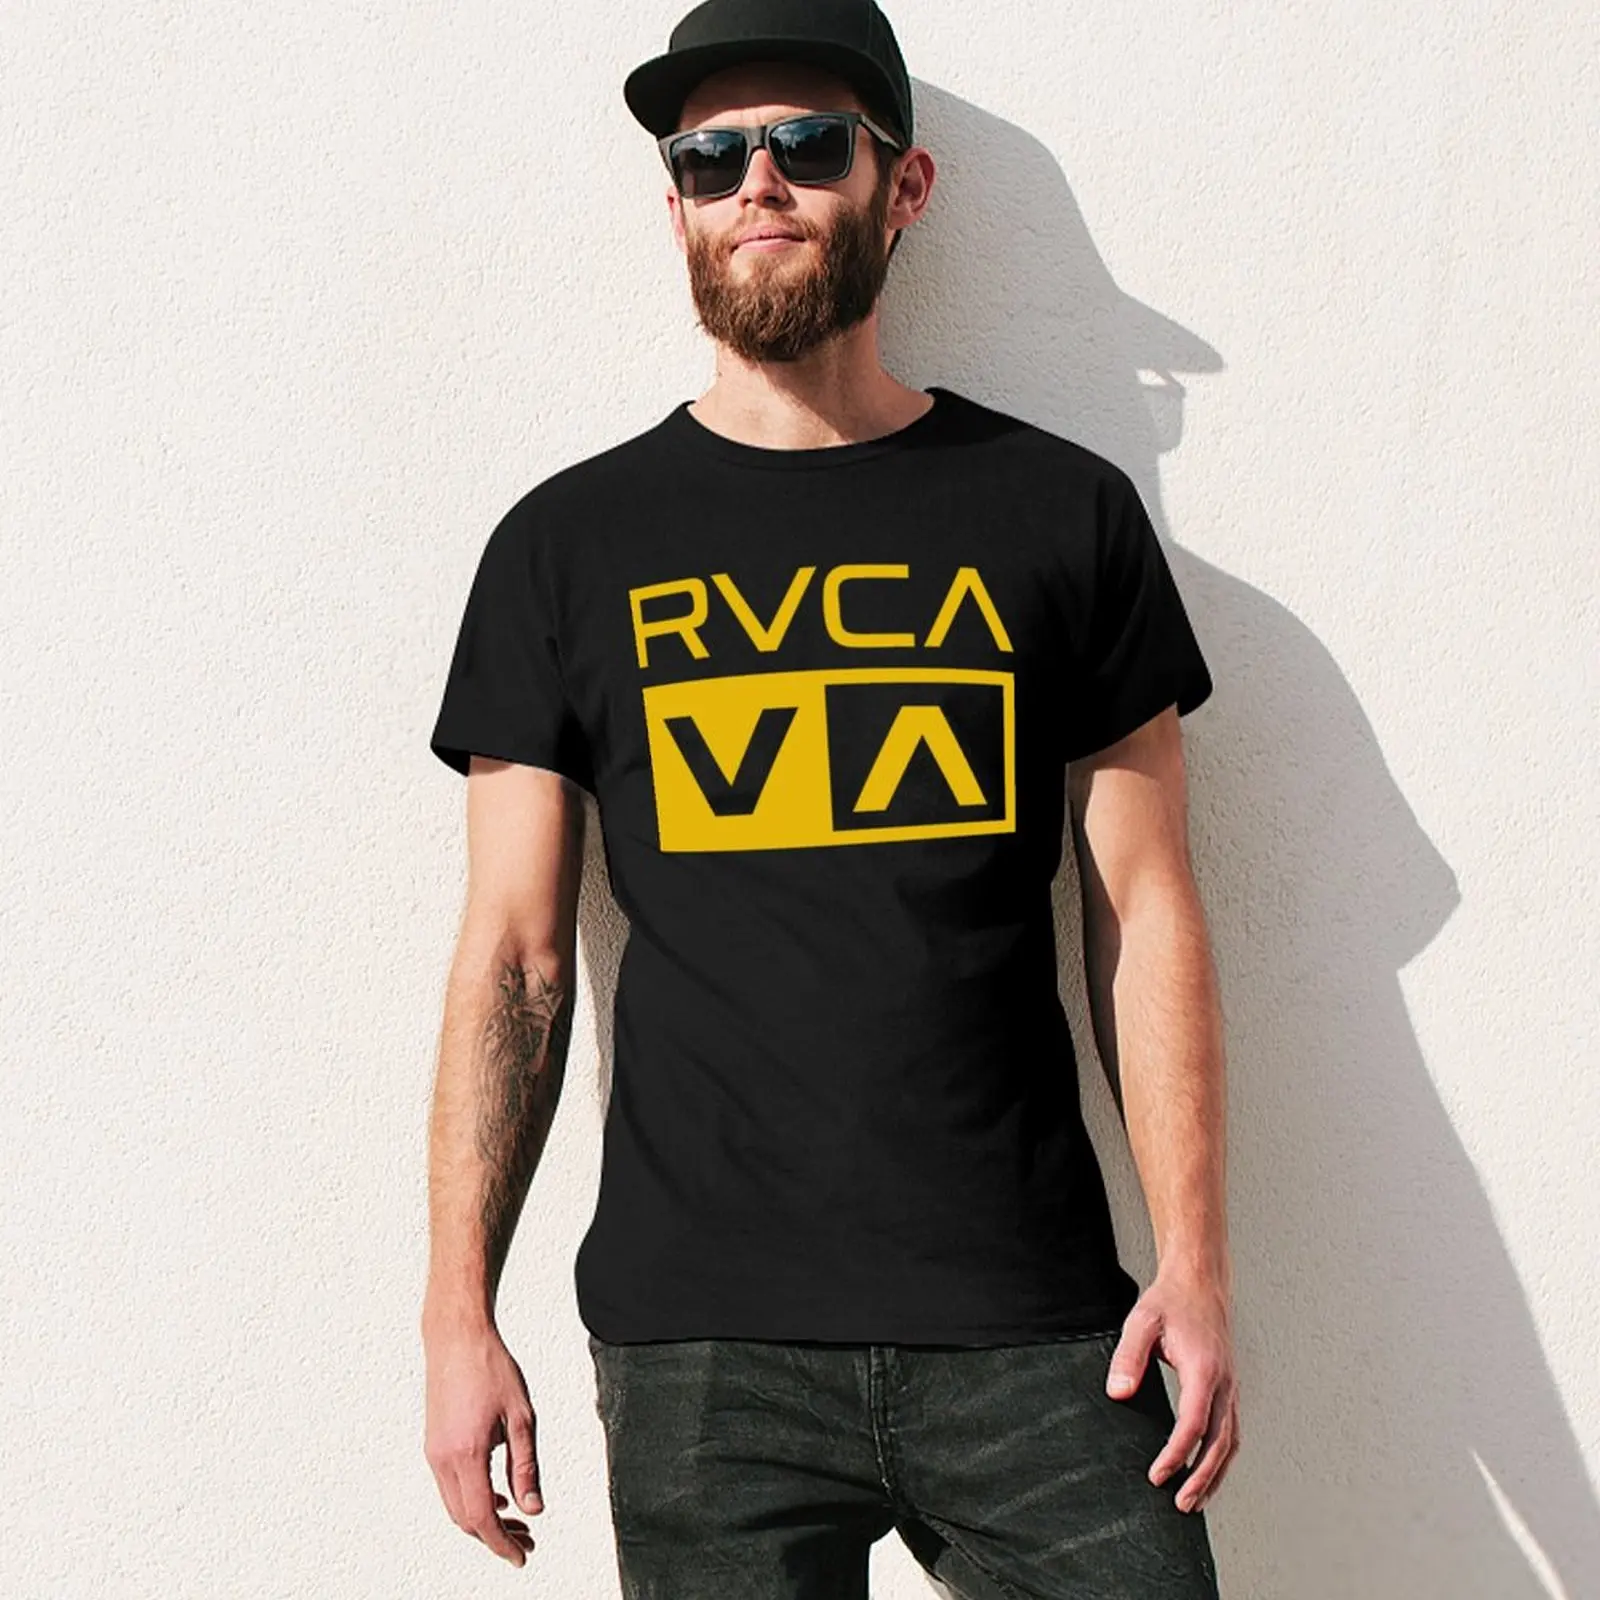 RVCA VA T-Shirt hippie clothes sweat blanks new edition men clothings